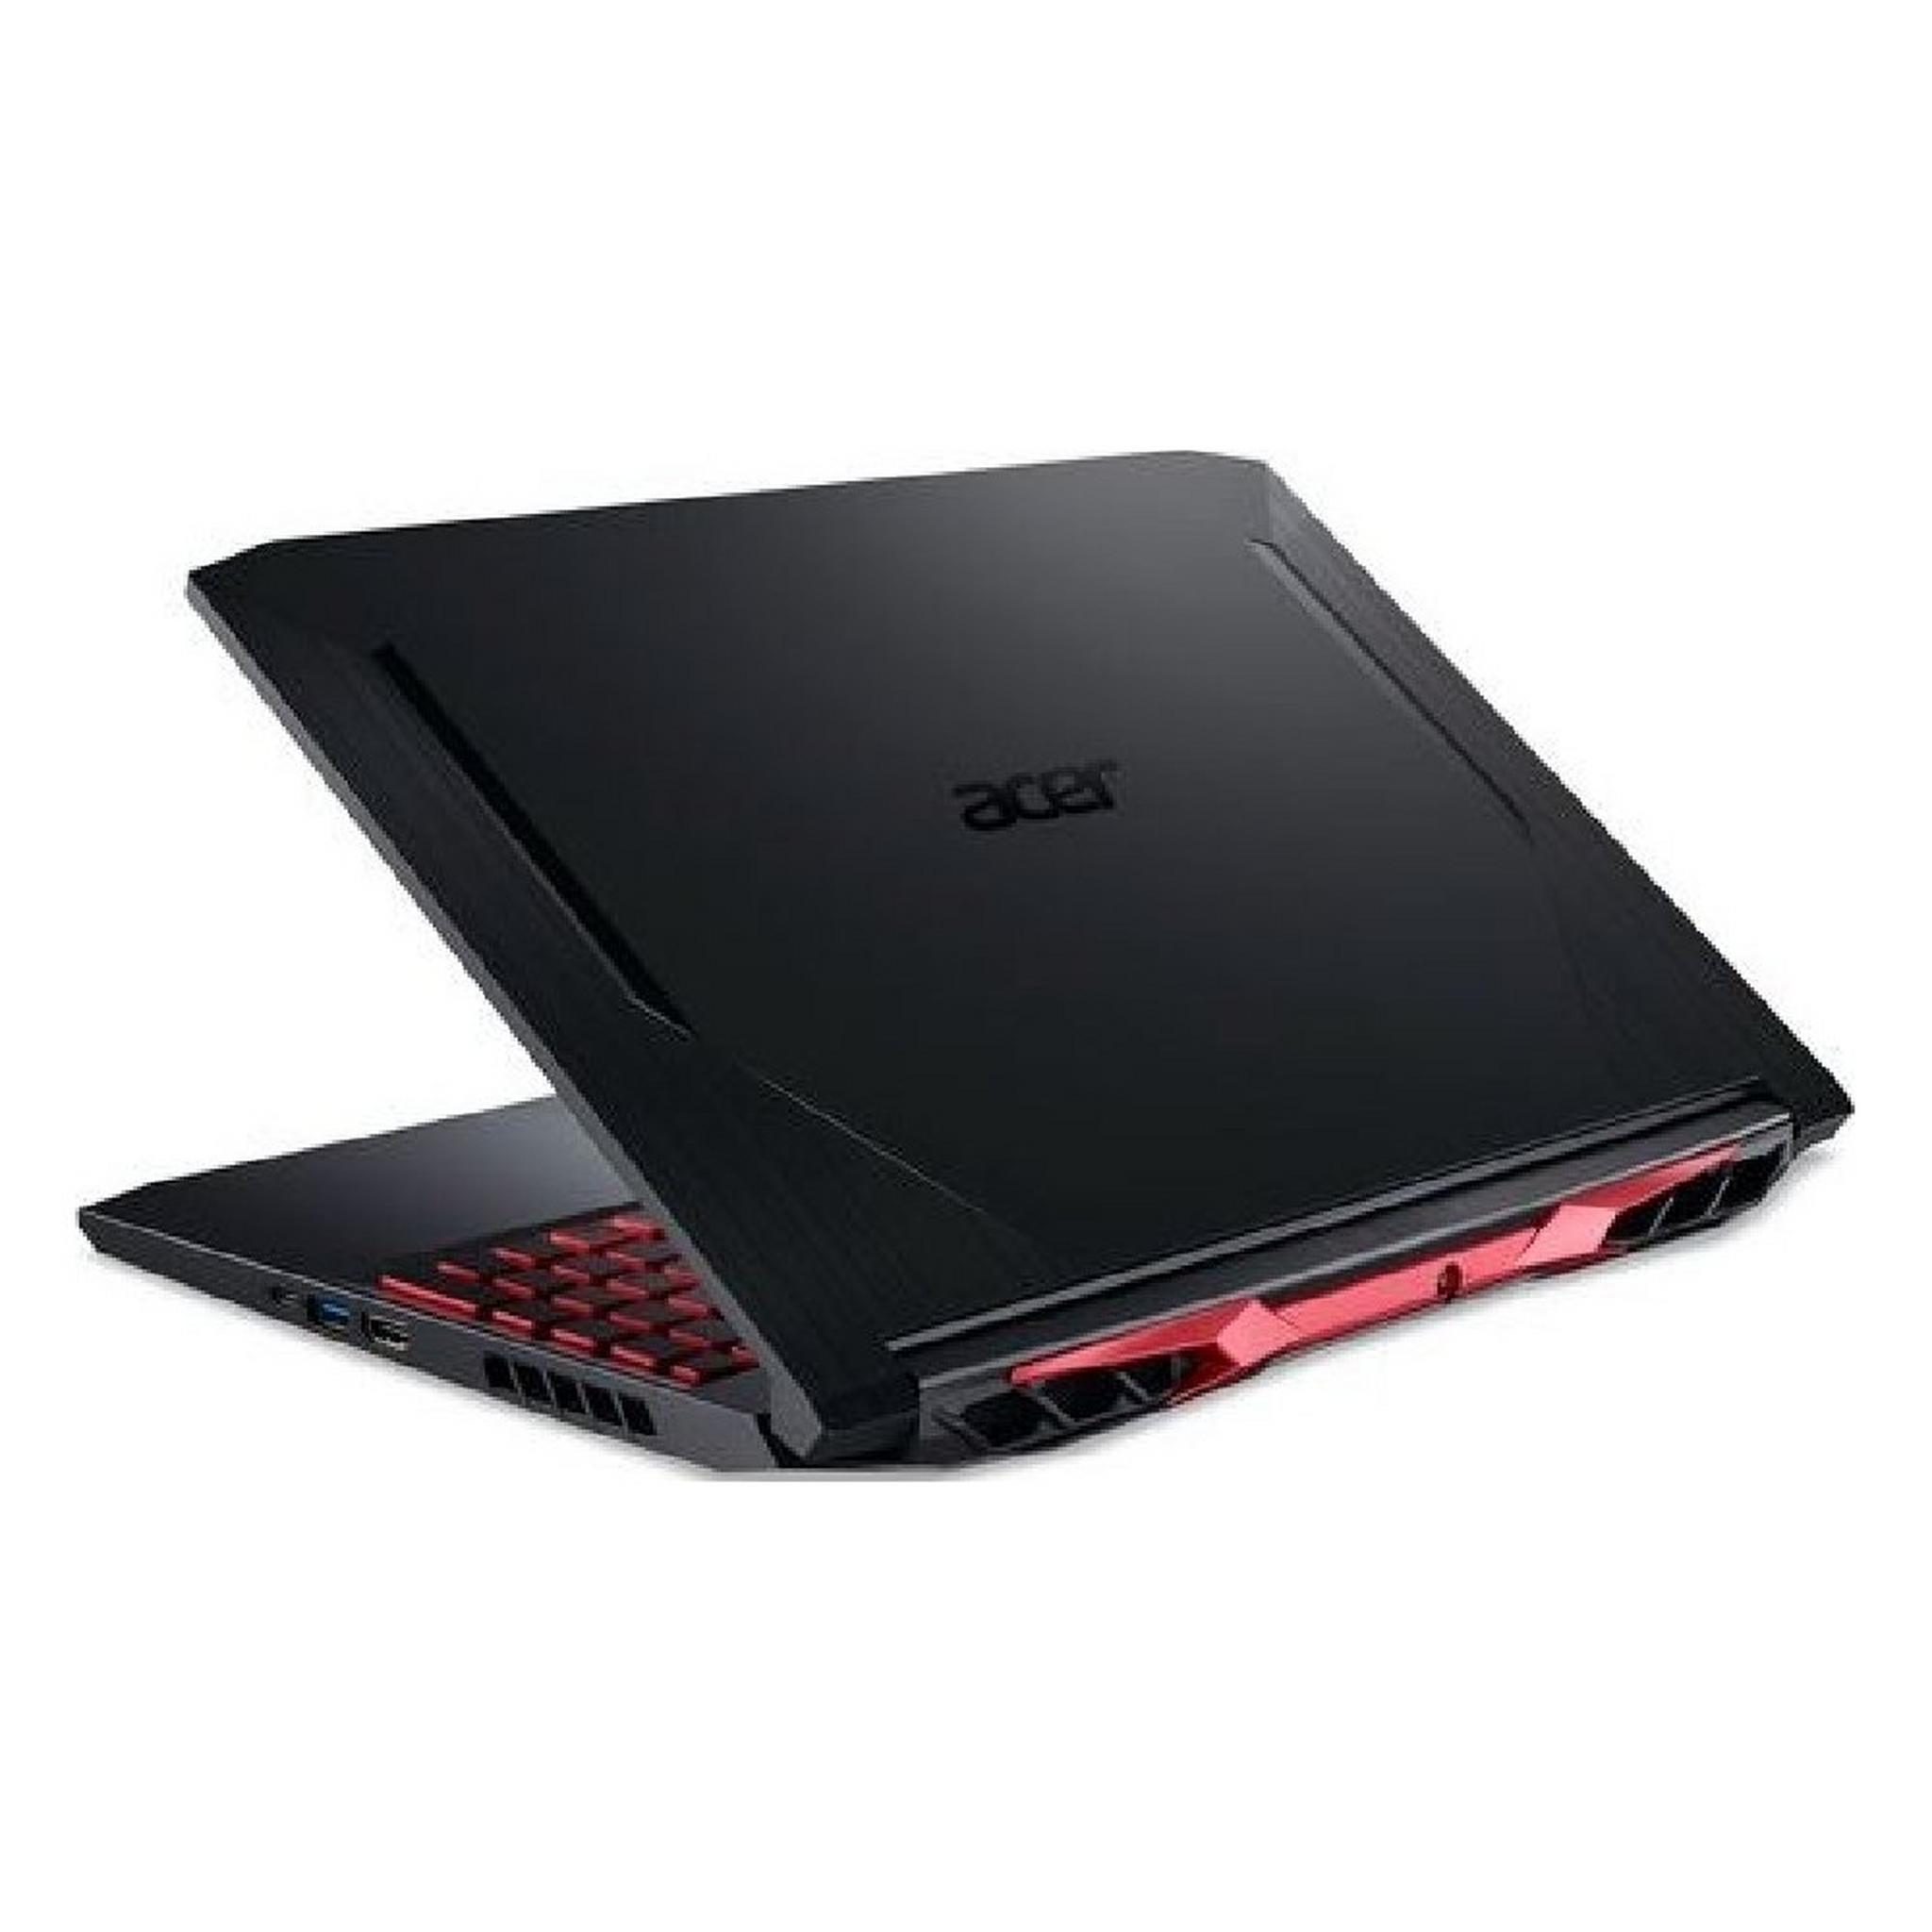 Acer Nitro 5 Intel core i5, RAM 8GB, 1TB SSD, Graphics nVidia GeForce GTX 1650TI - 15.6-inch Gaming Laptop (NH.Q7JEM.006)